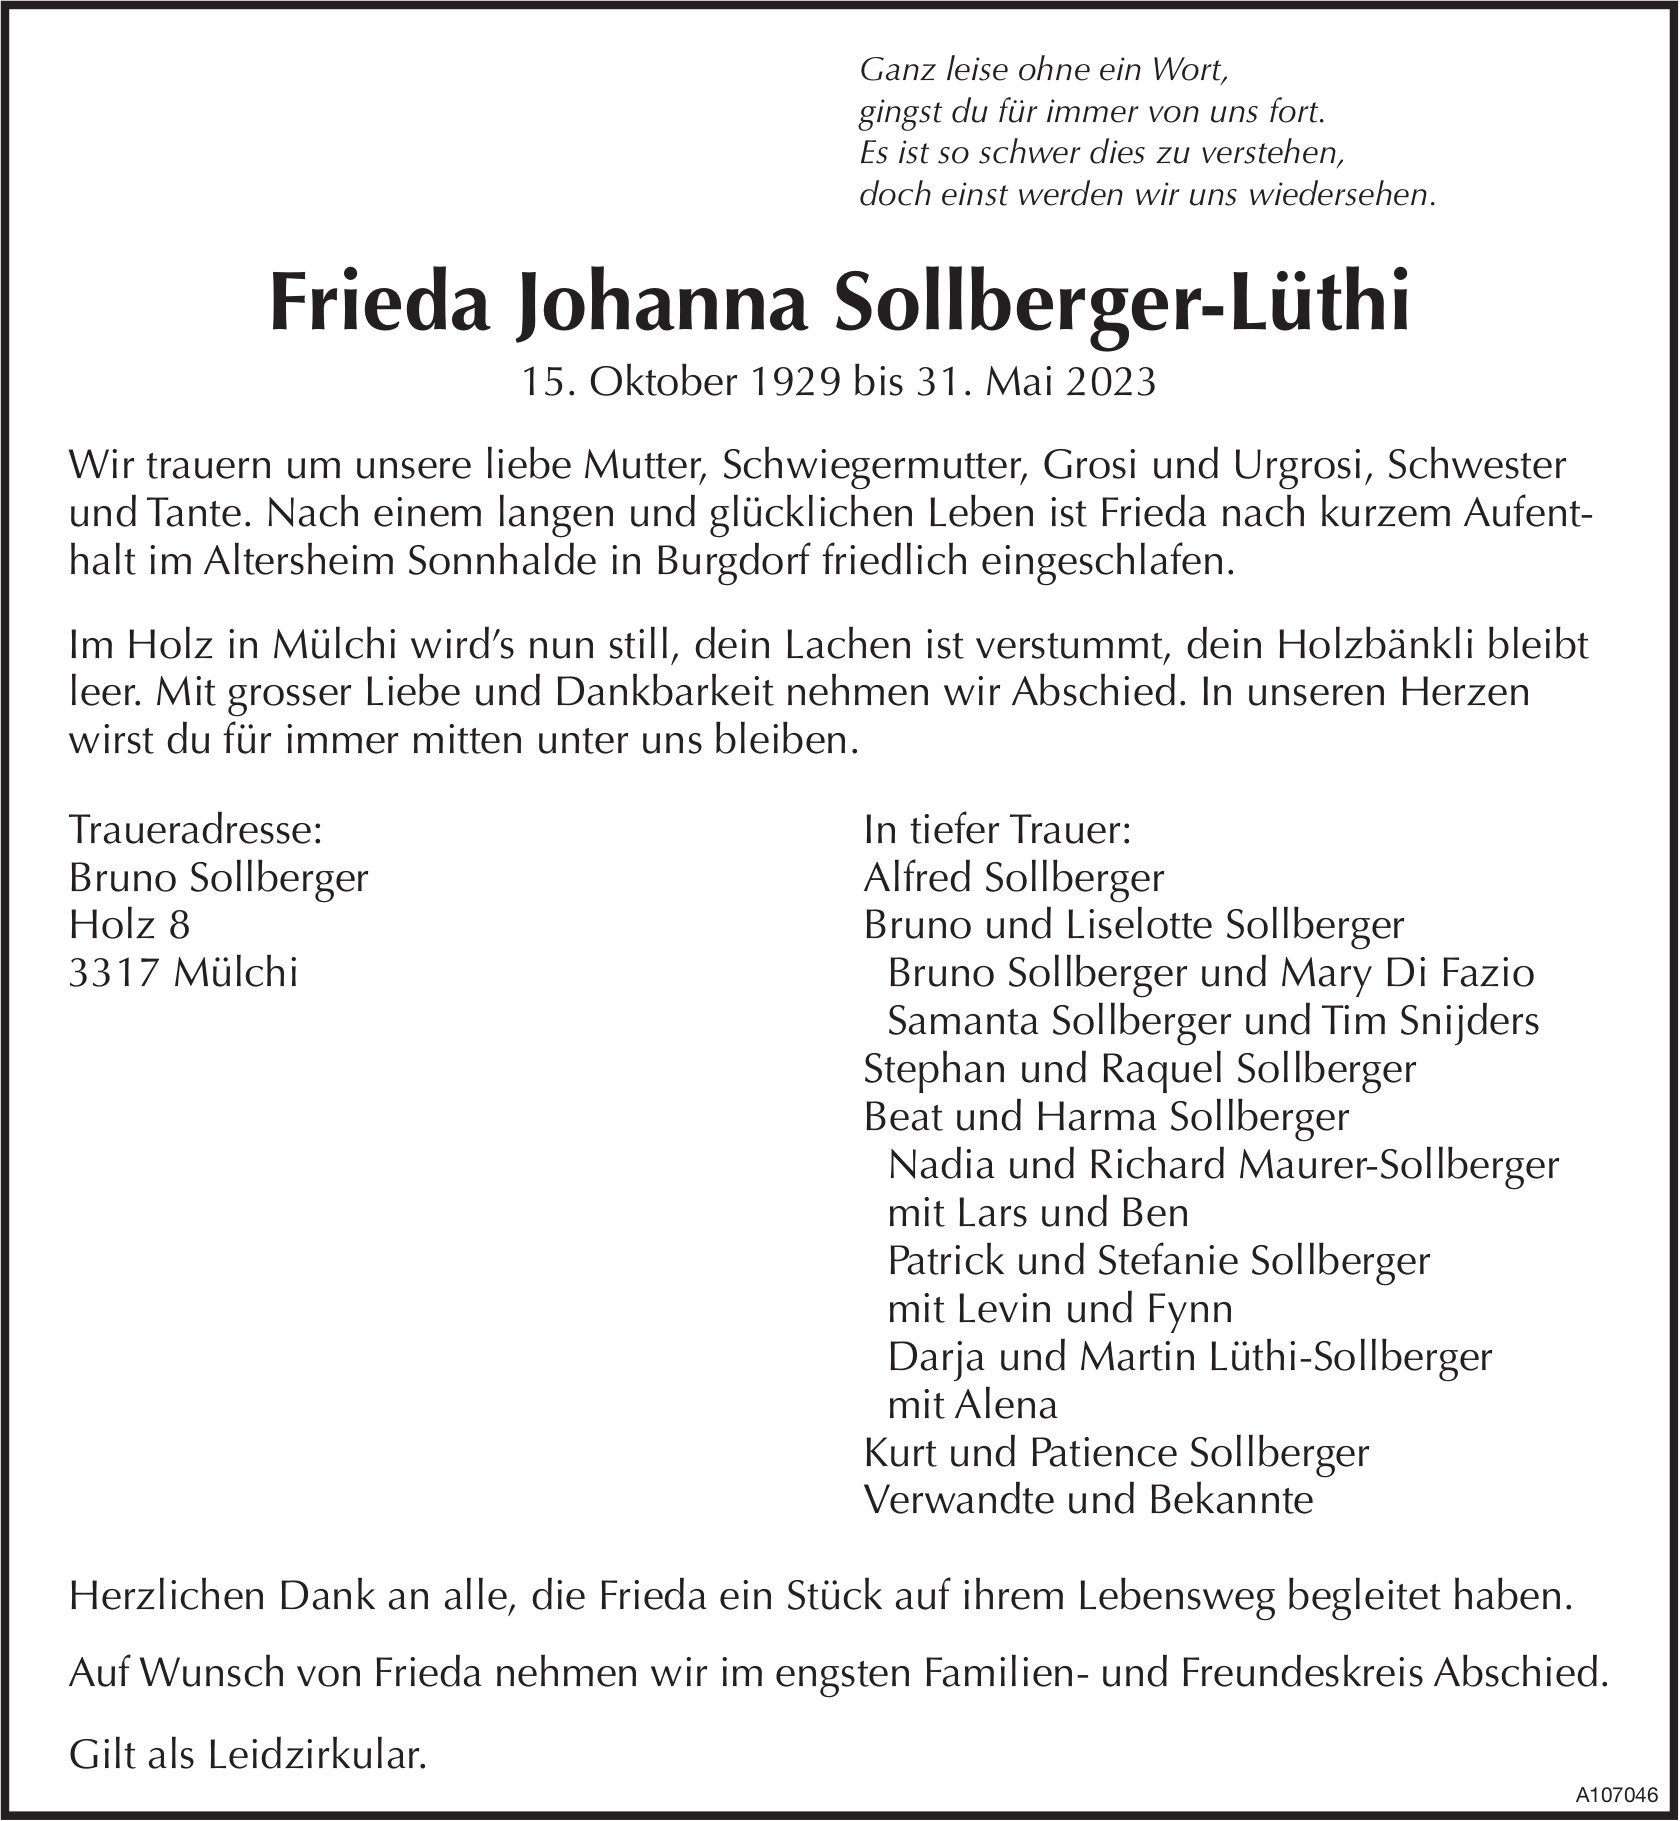 Frieda Johanna Sollberger-Lüthi, Mai 2023 / TA